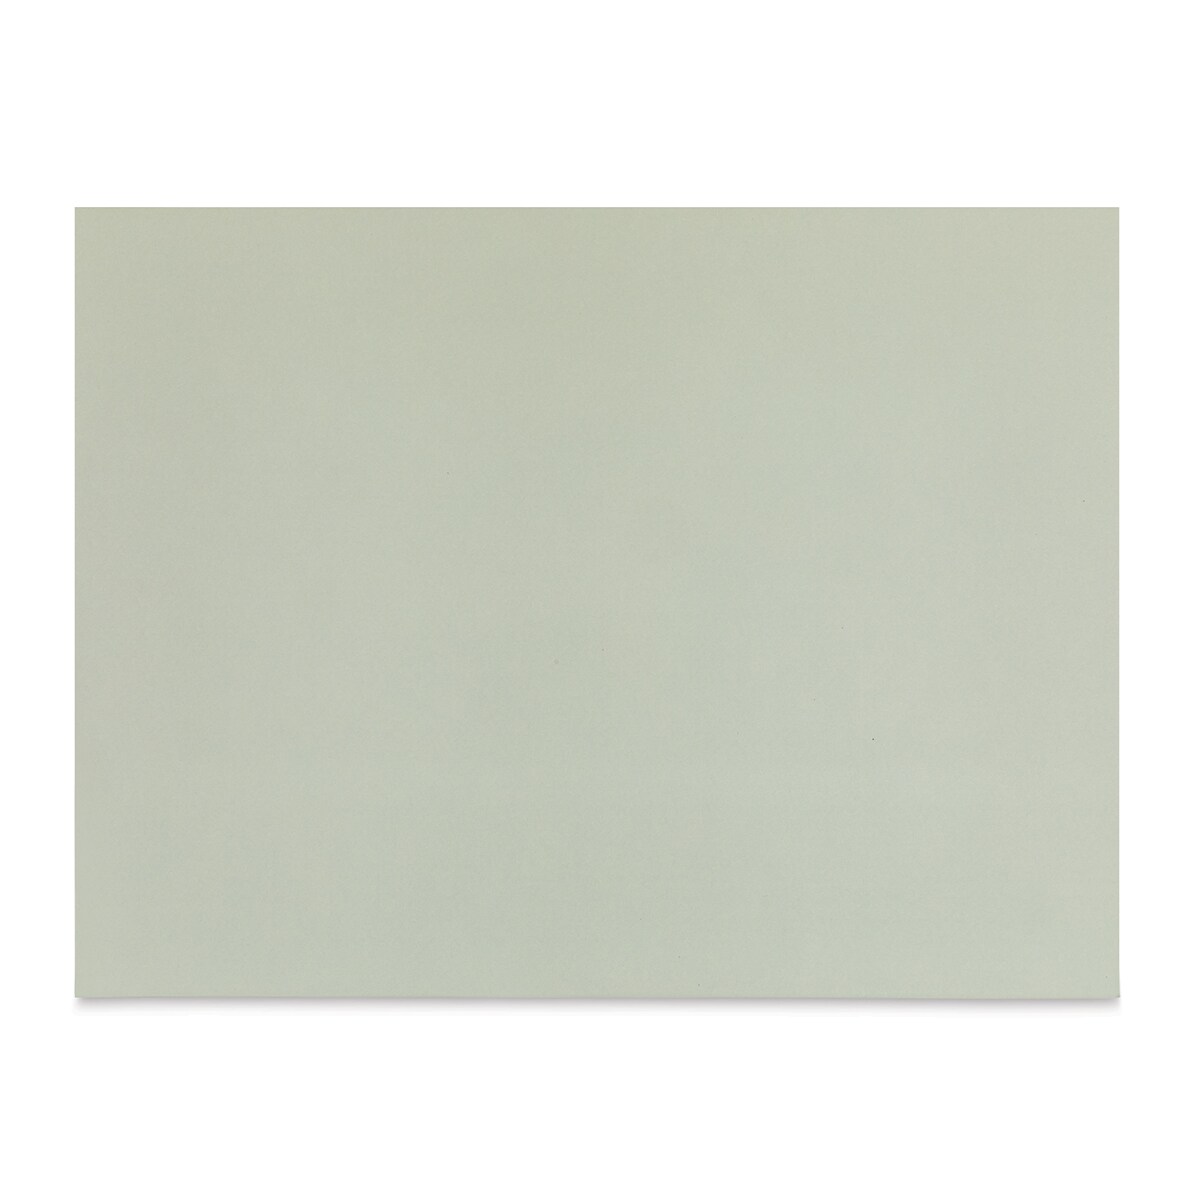 Pacon Tru-Ray Construction Paper - 18 x 24, Gray, 50 Sheets